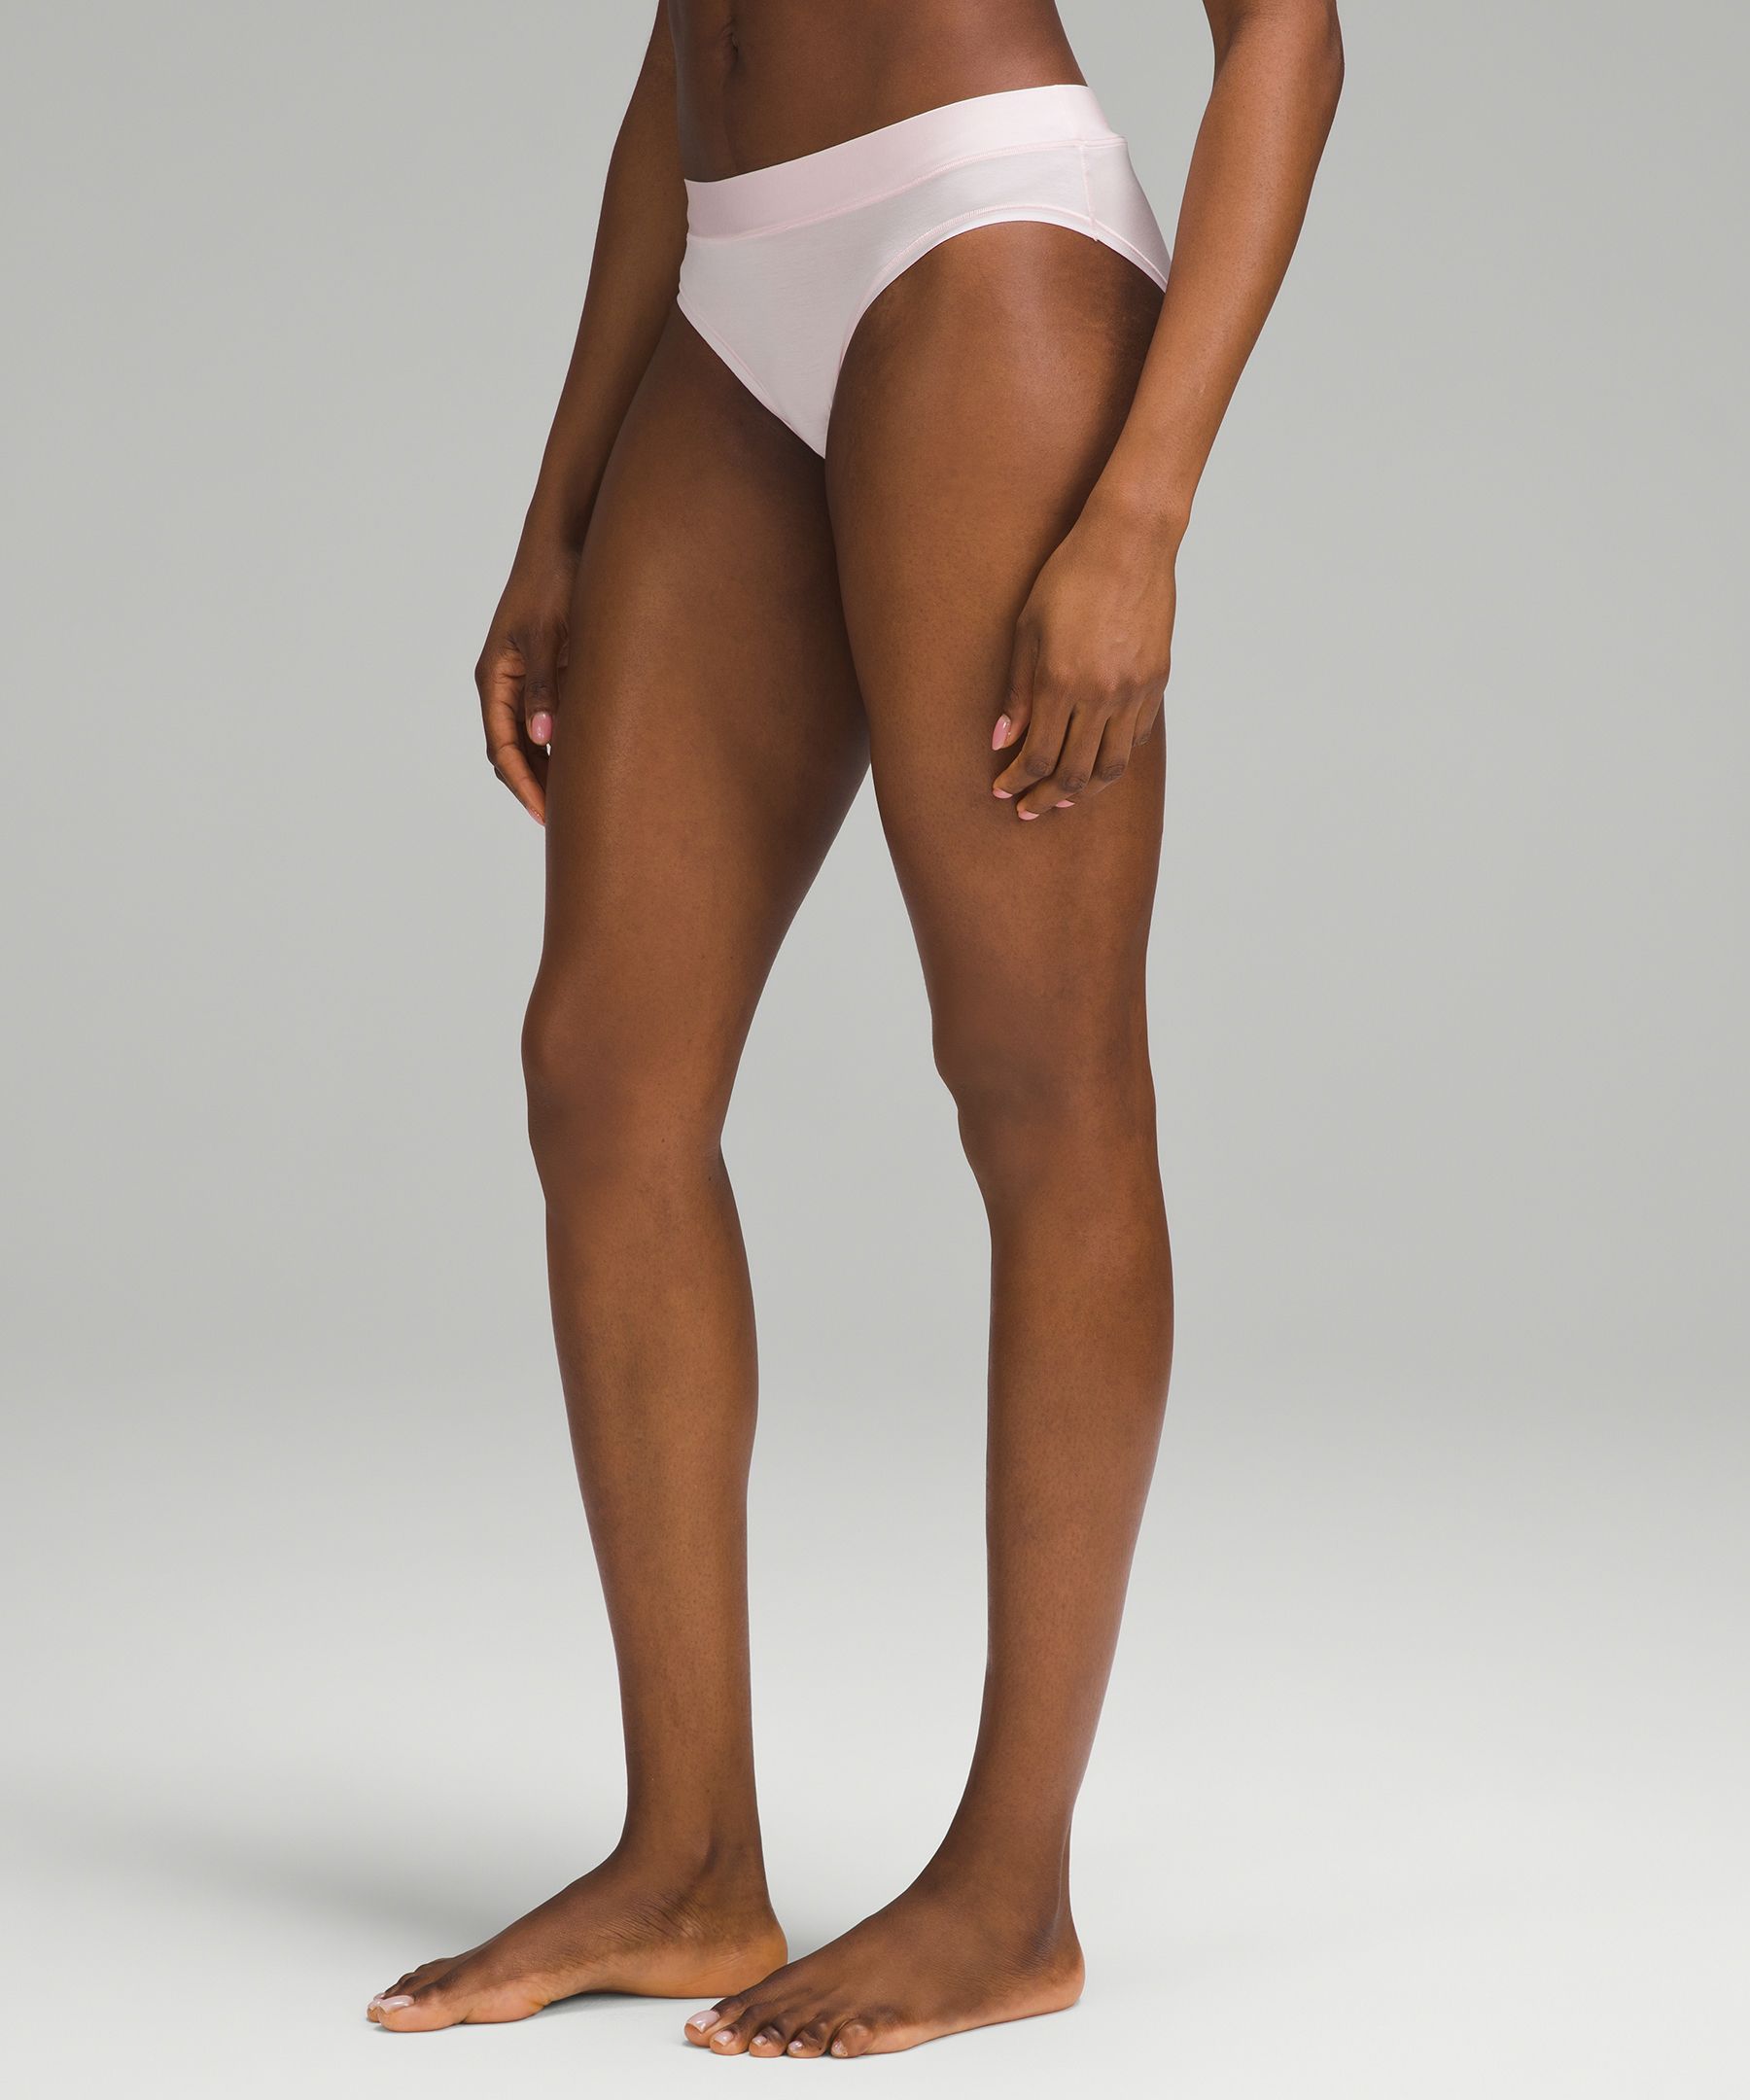 Lululemon Ladies Underwear Mula Bandhawear Bikini (Size M 6/8) RRP